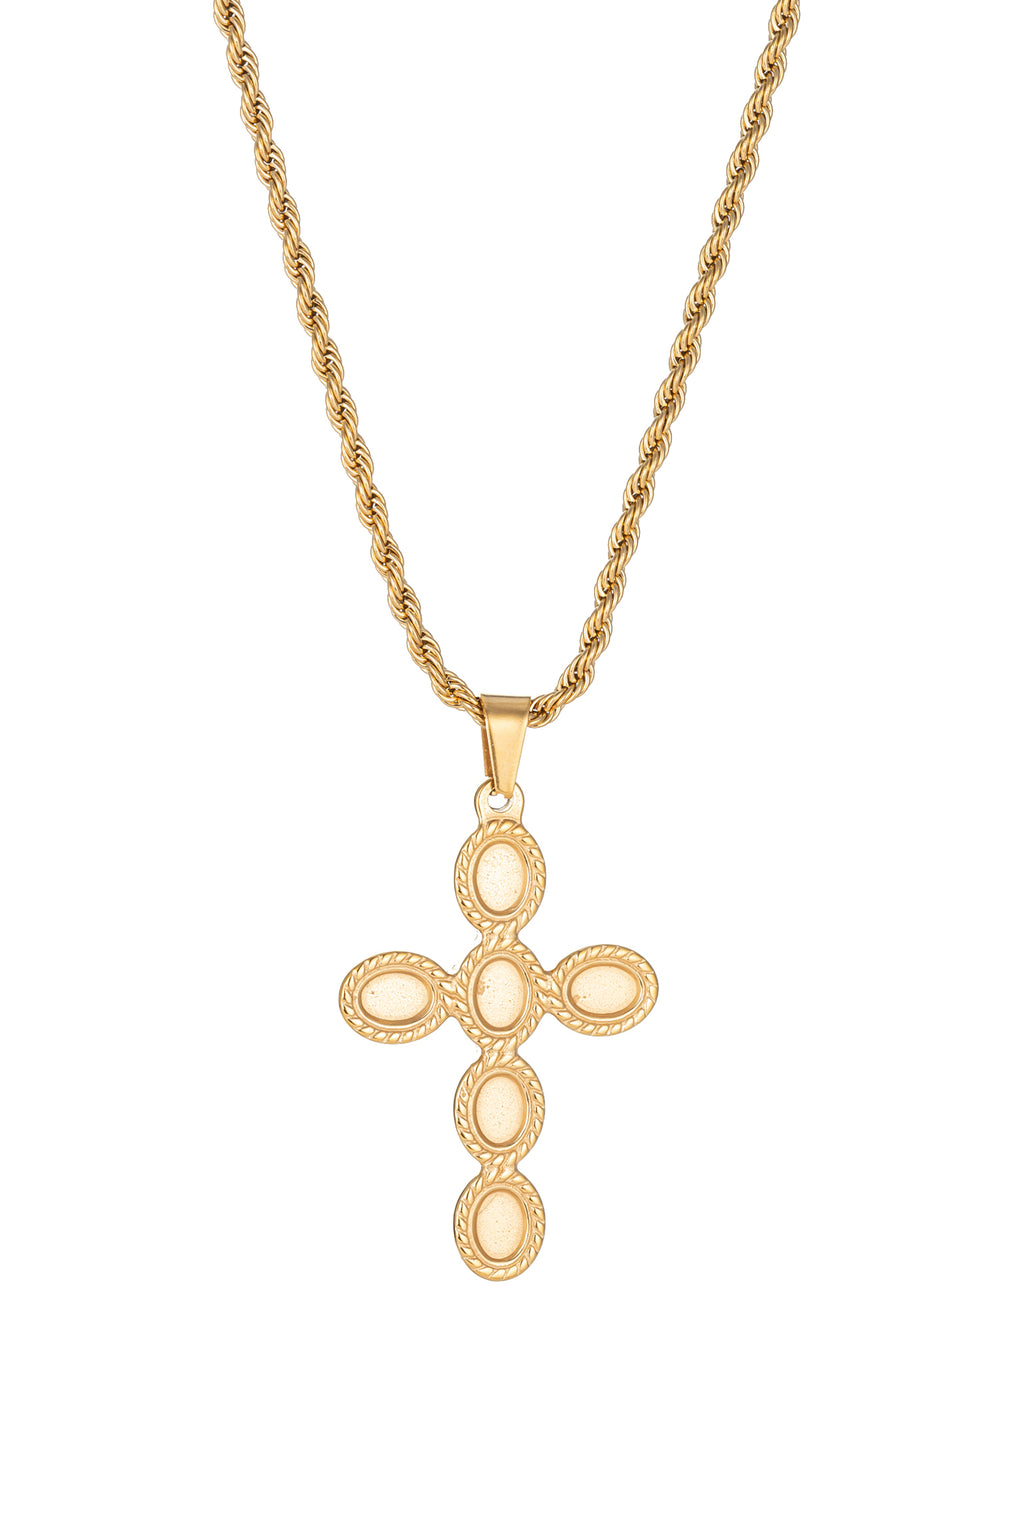 Gold titanium cross pendant necklace.